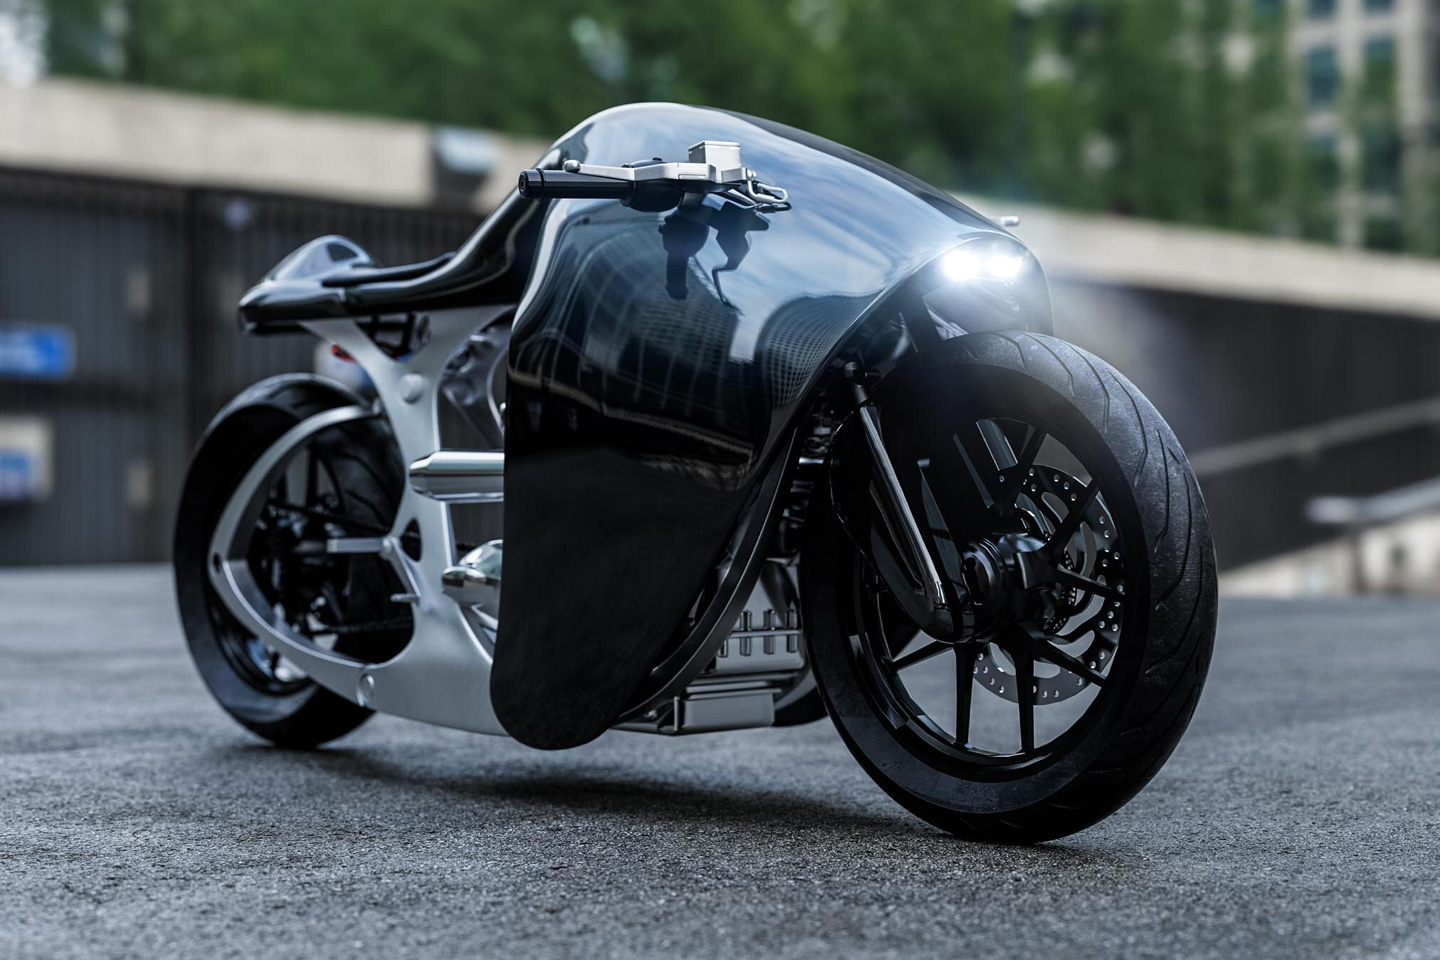 The Supermarine is an audaciously aerodynamic motorbike with an organic, manta-ray design